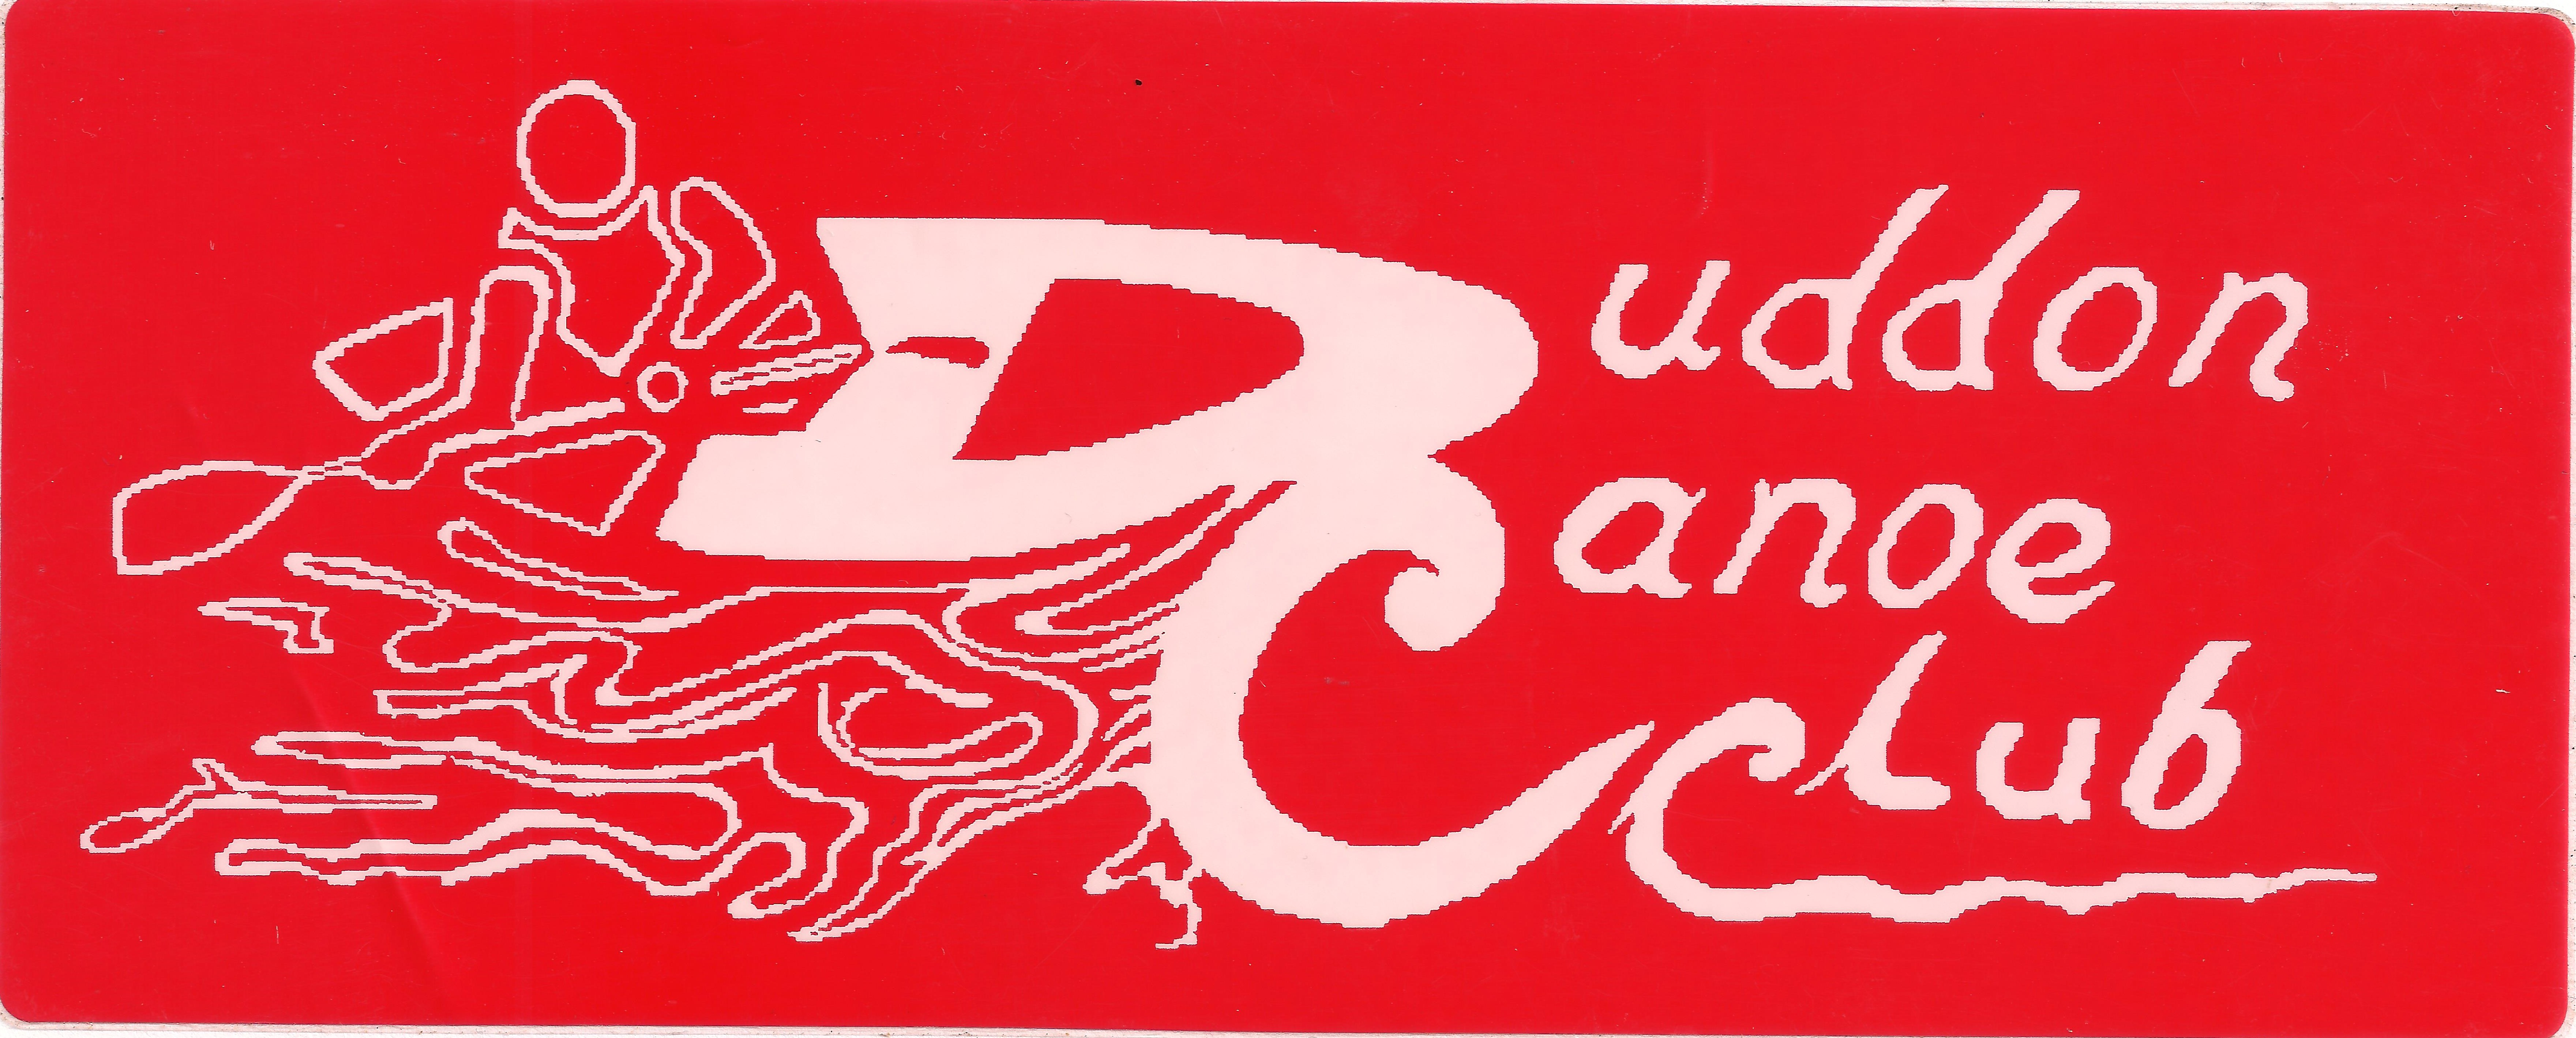 Duddon Canoe Club logo